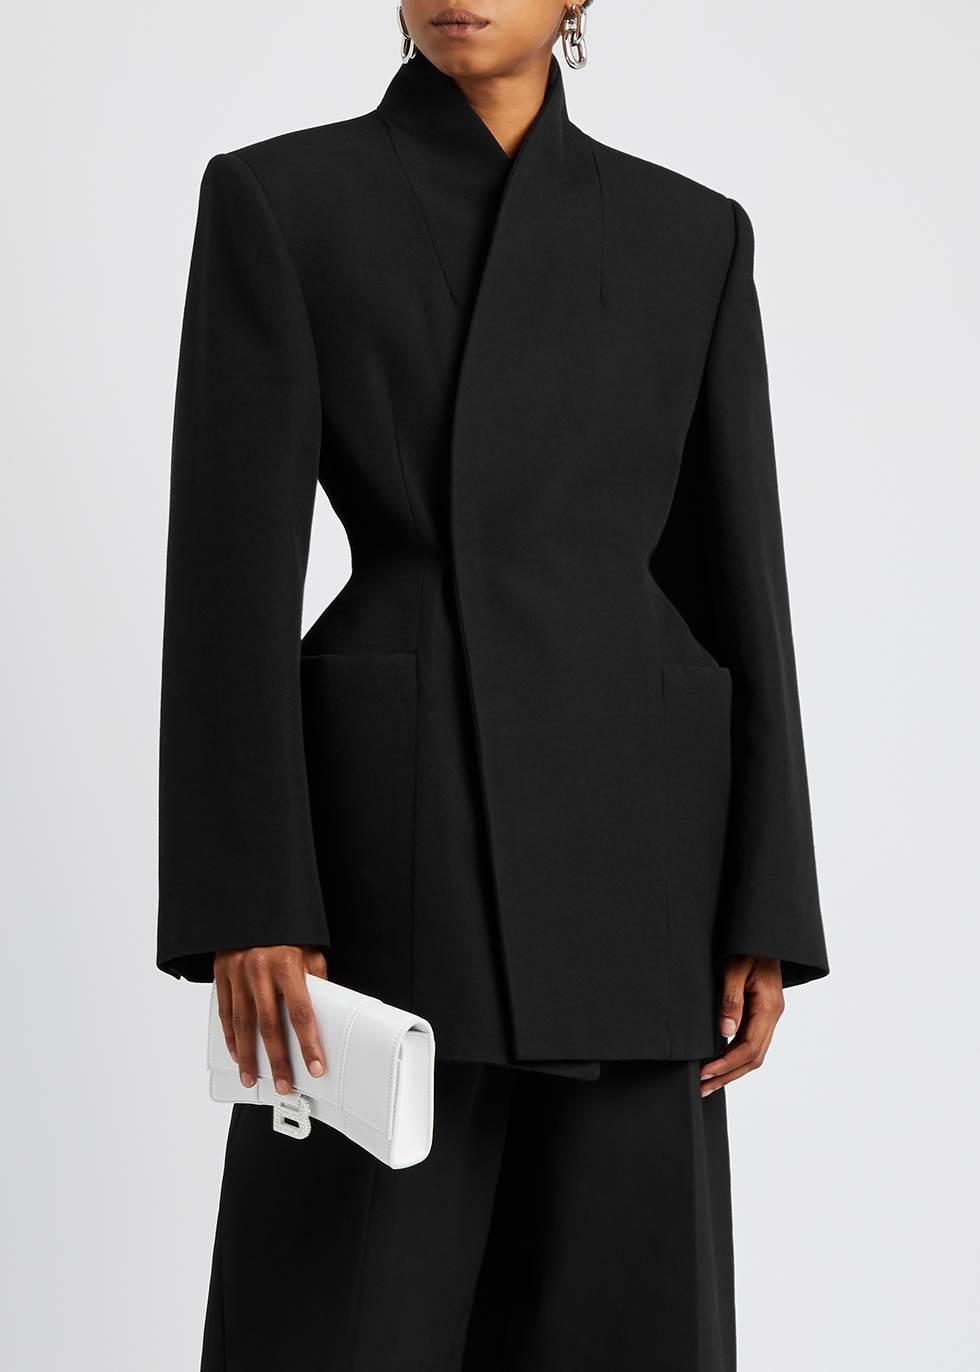 Balenciaga Black wool shirt jacket  TheDoubleF